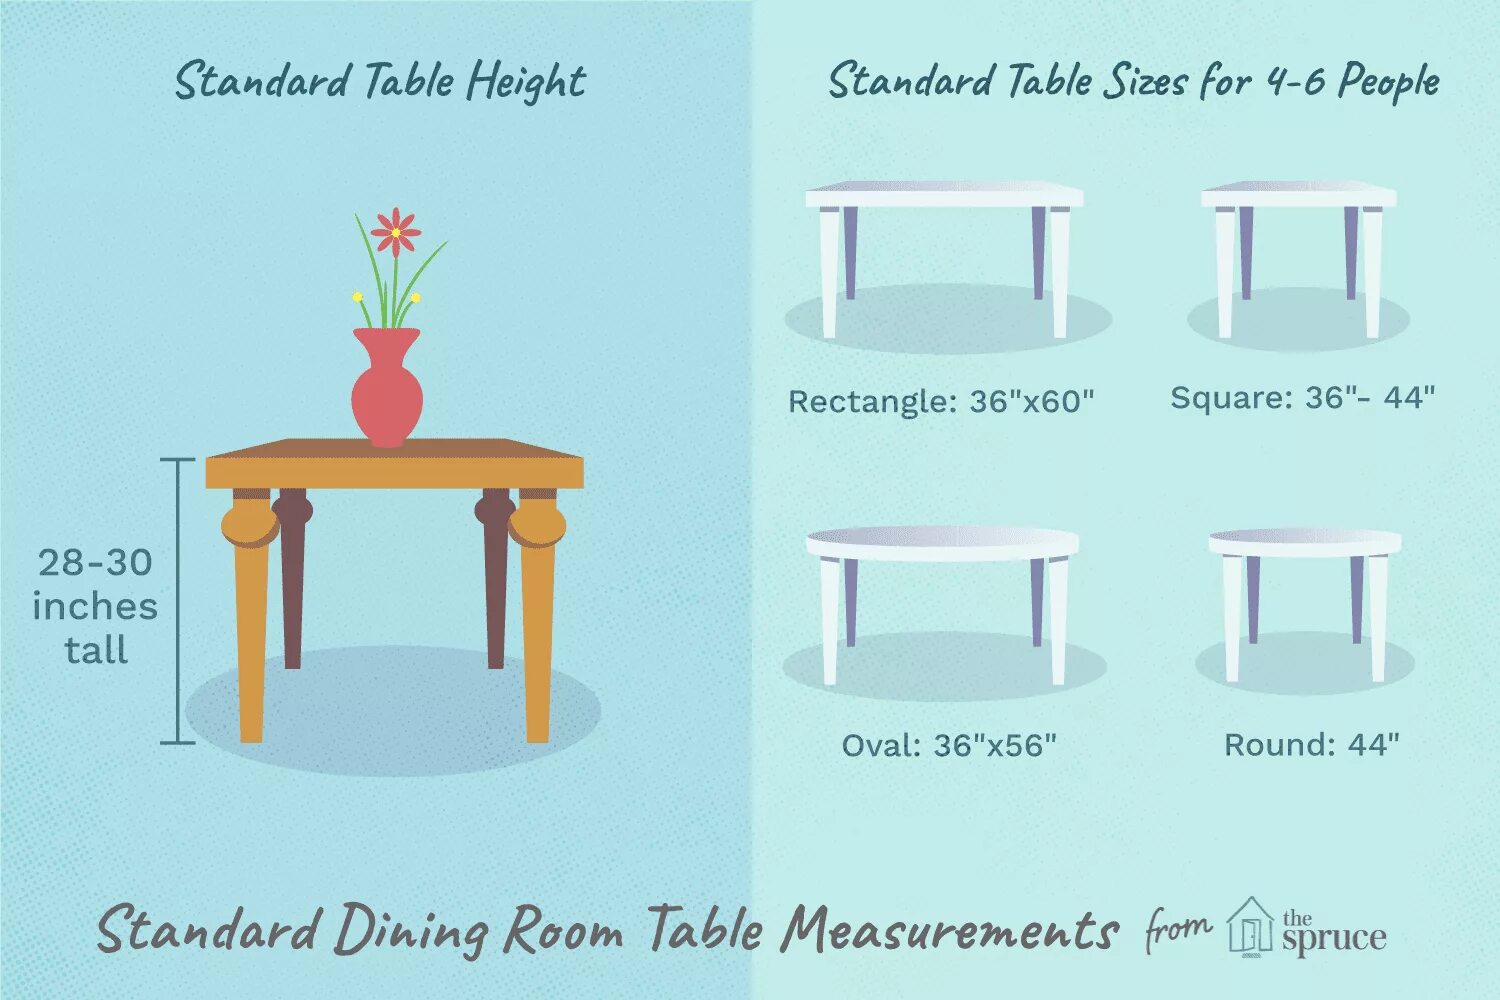 Dining перевод на русский. Dining Table Size. Высота обеденного стола стандарт. Dining Table Dimensions. Раунд тейбл (Round Table) структура.